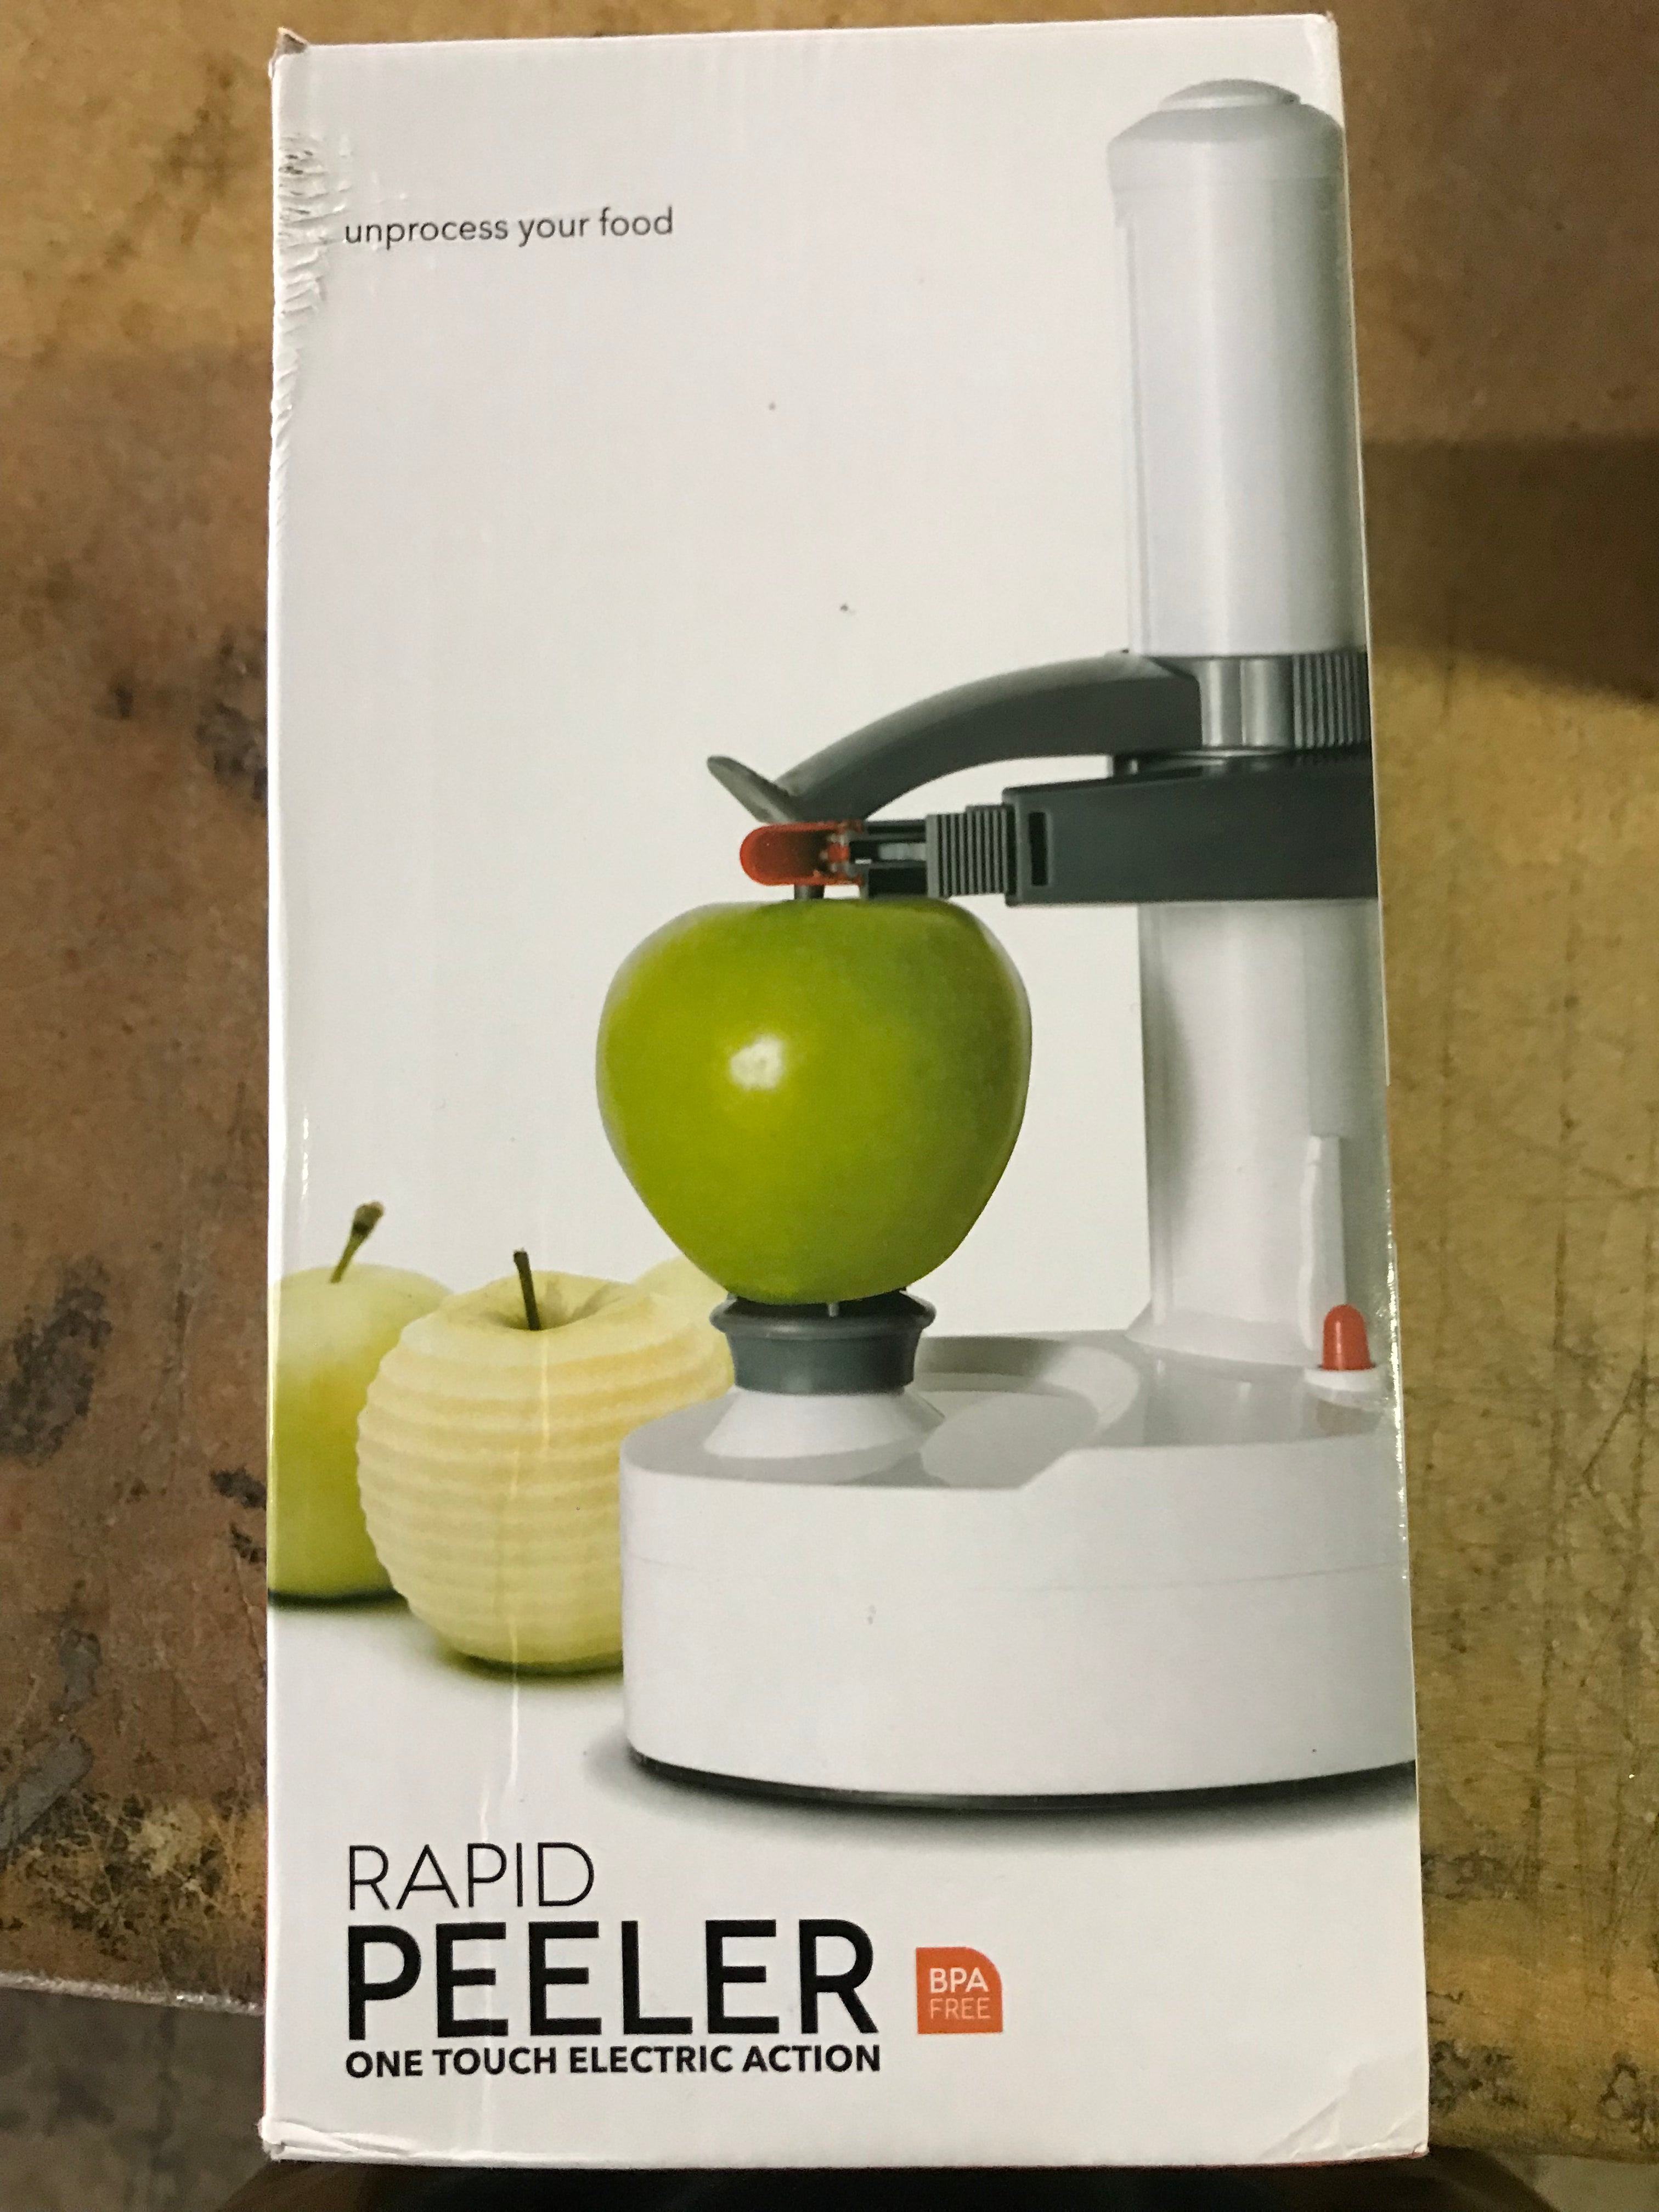 Electric Potato Peeler Apple Peeler Rapid Rotating Peeling Machine